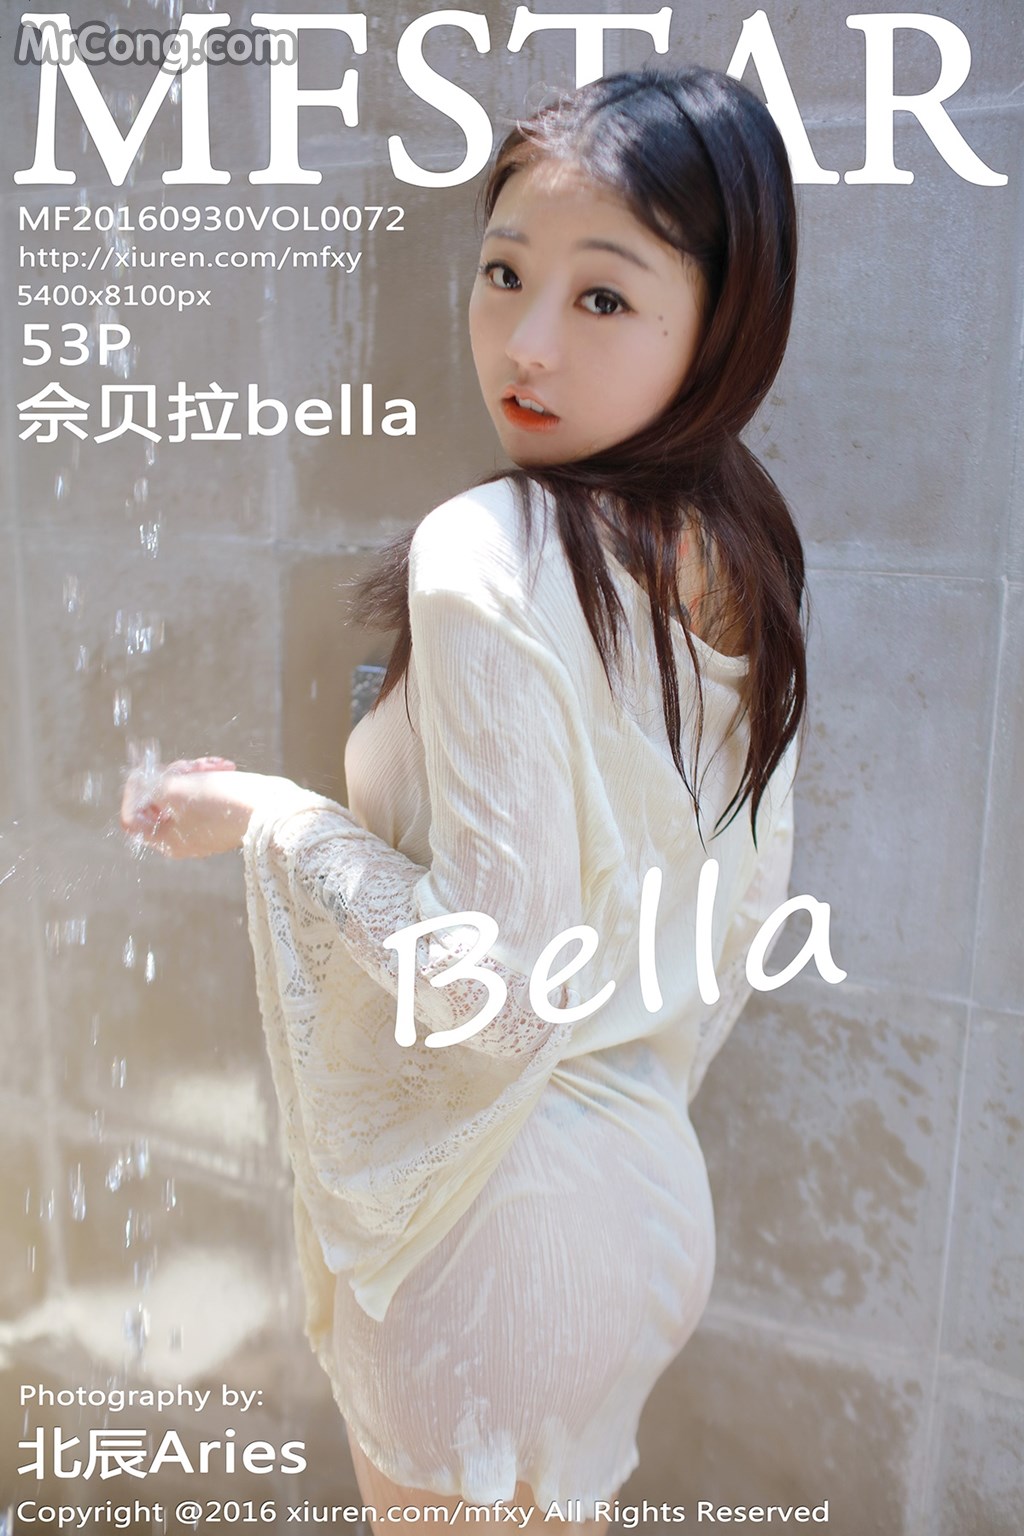 MFStar Vol.072: Model Bella (佘 贝拉) (54 photos) photo 1-0